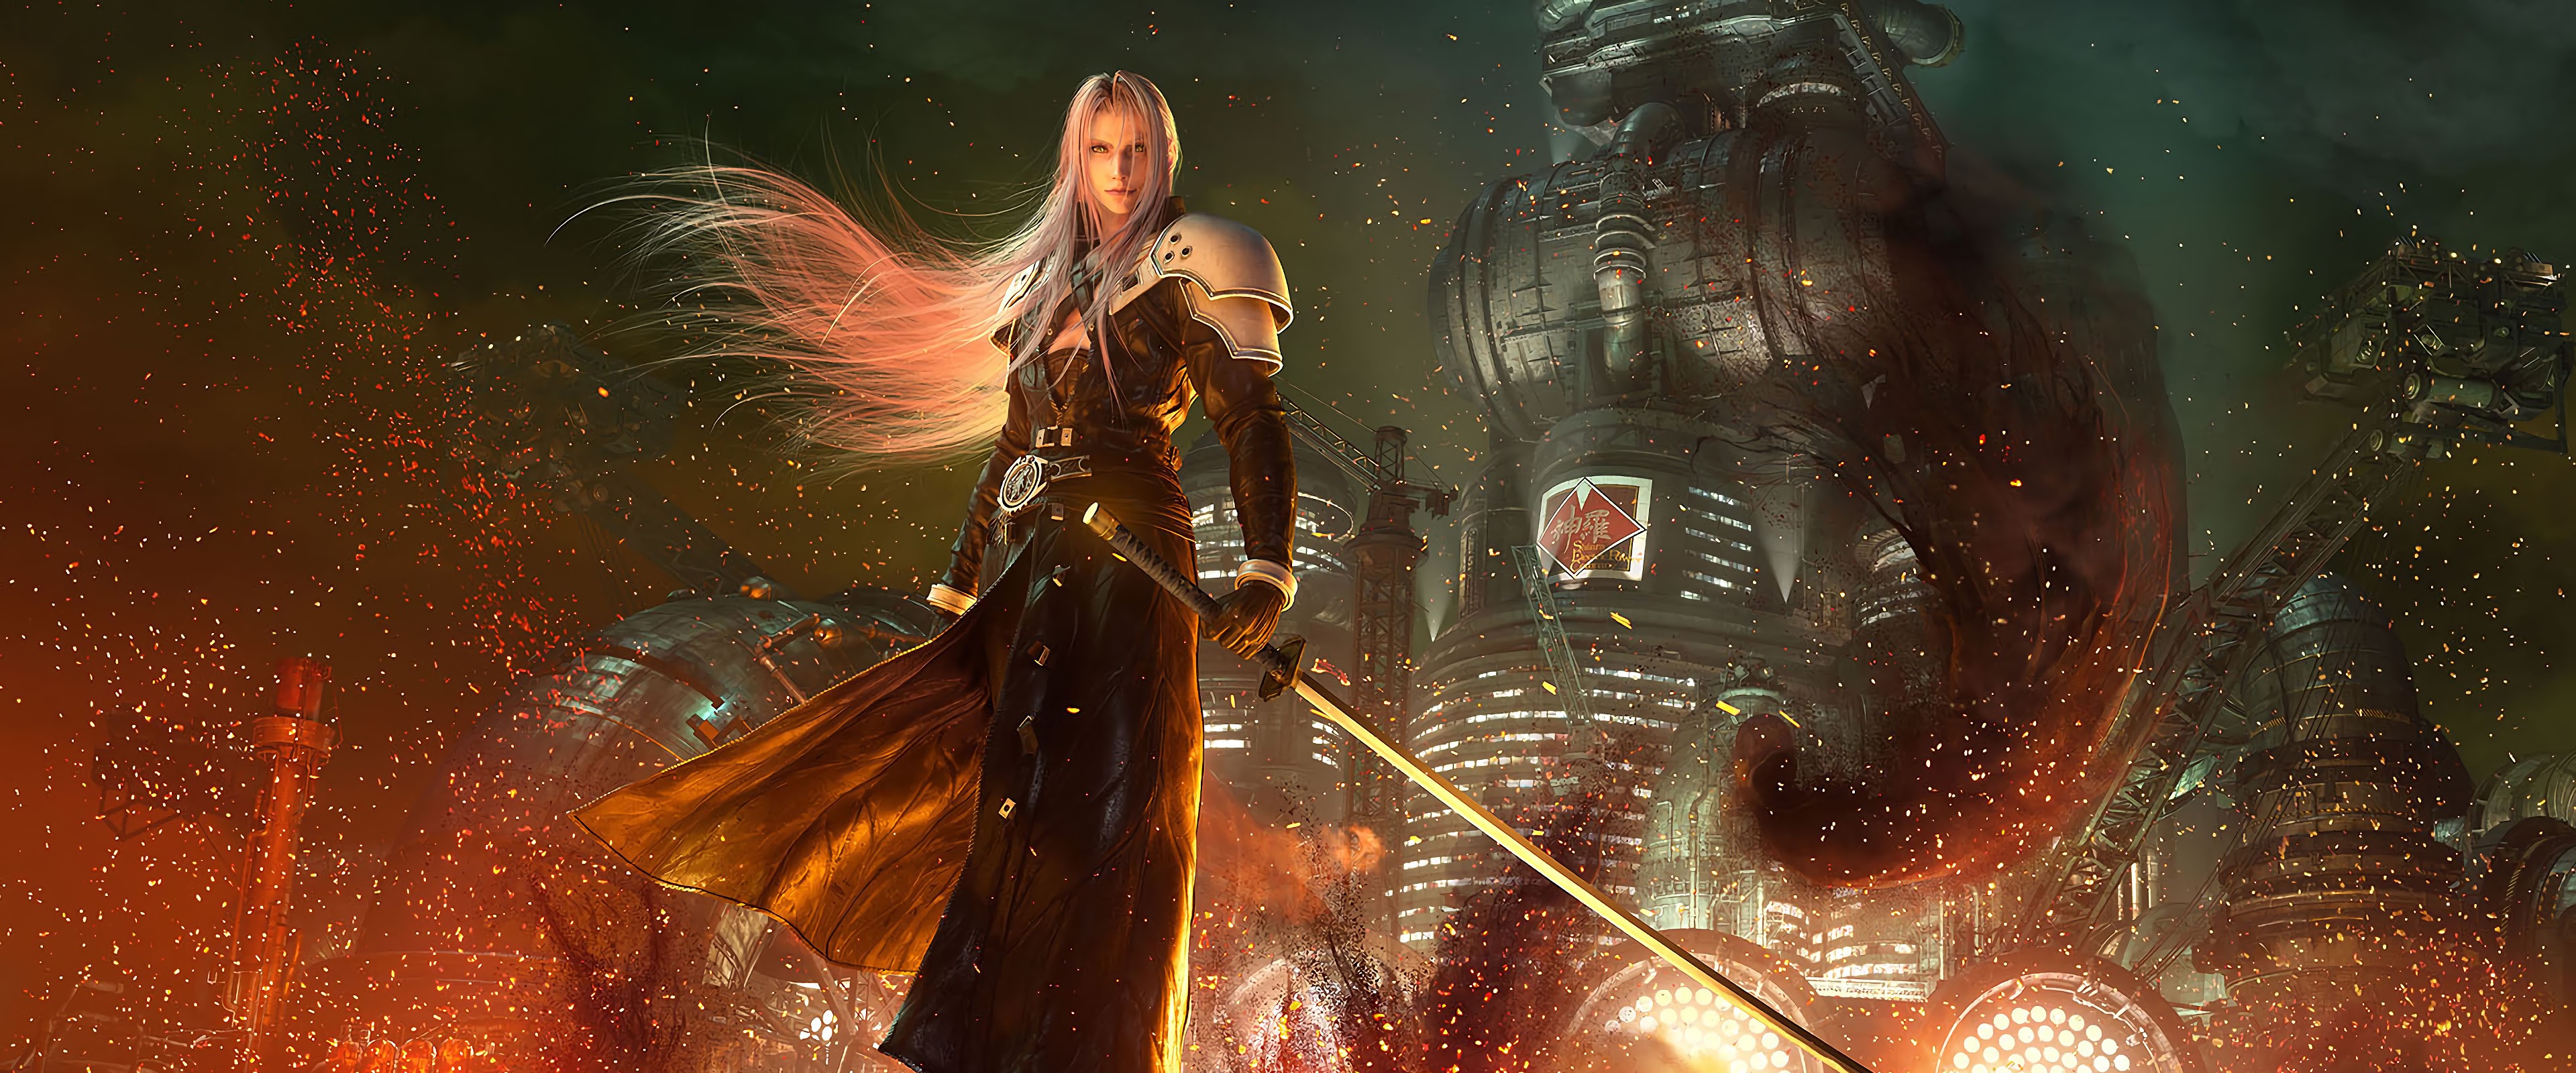 Sephiroth, Final Fantasy 7 Remake, 4k, - Final Fantasy 7 Remake - HD Wallpaper 